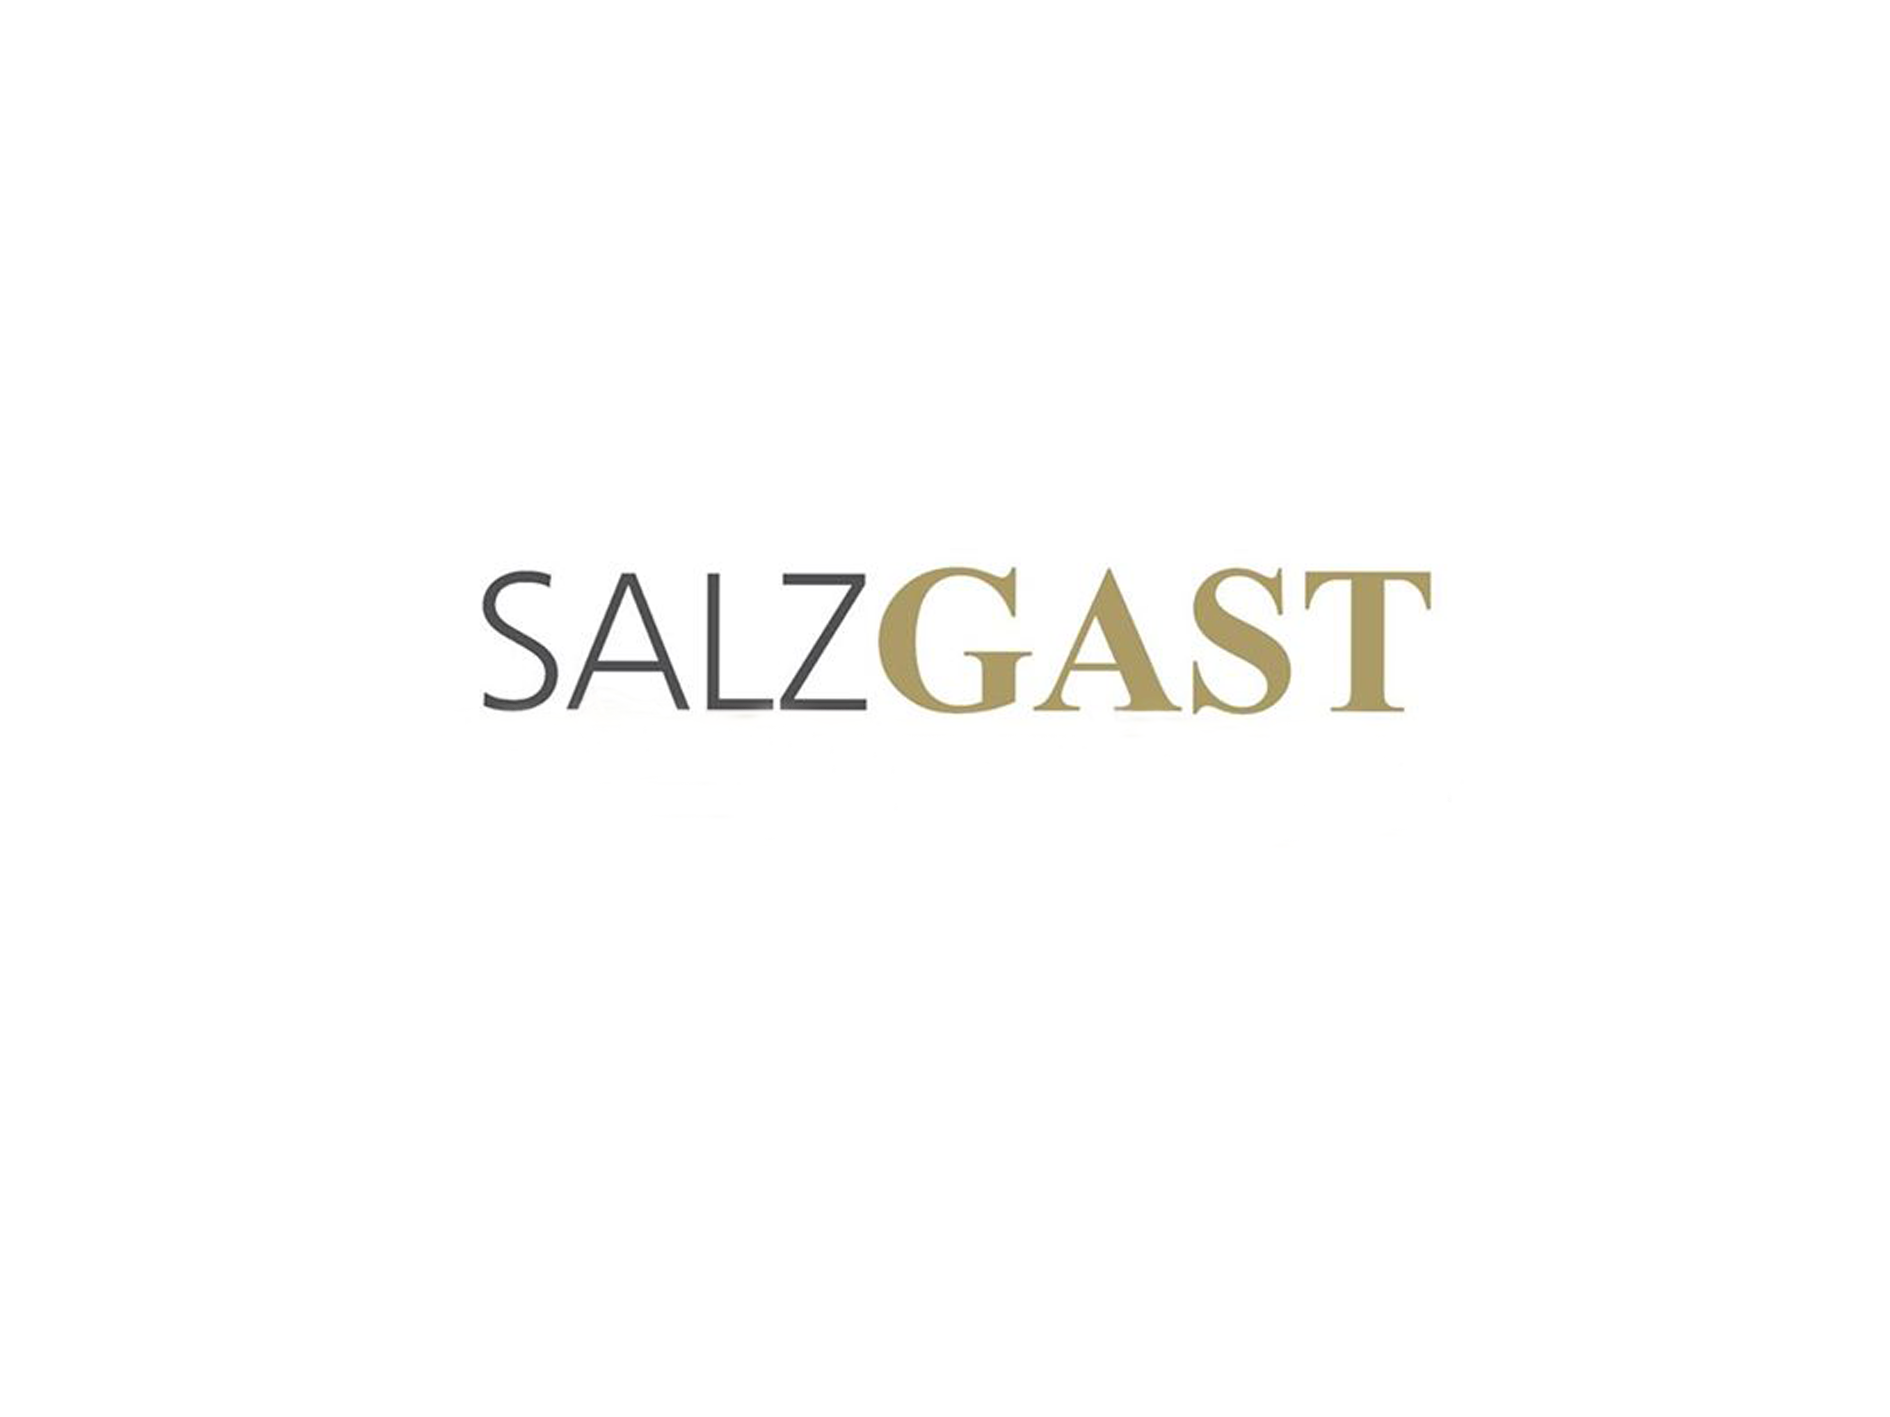 Salzgast